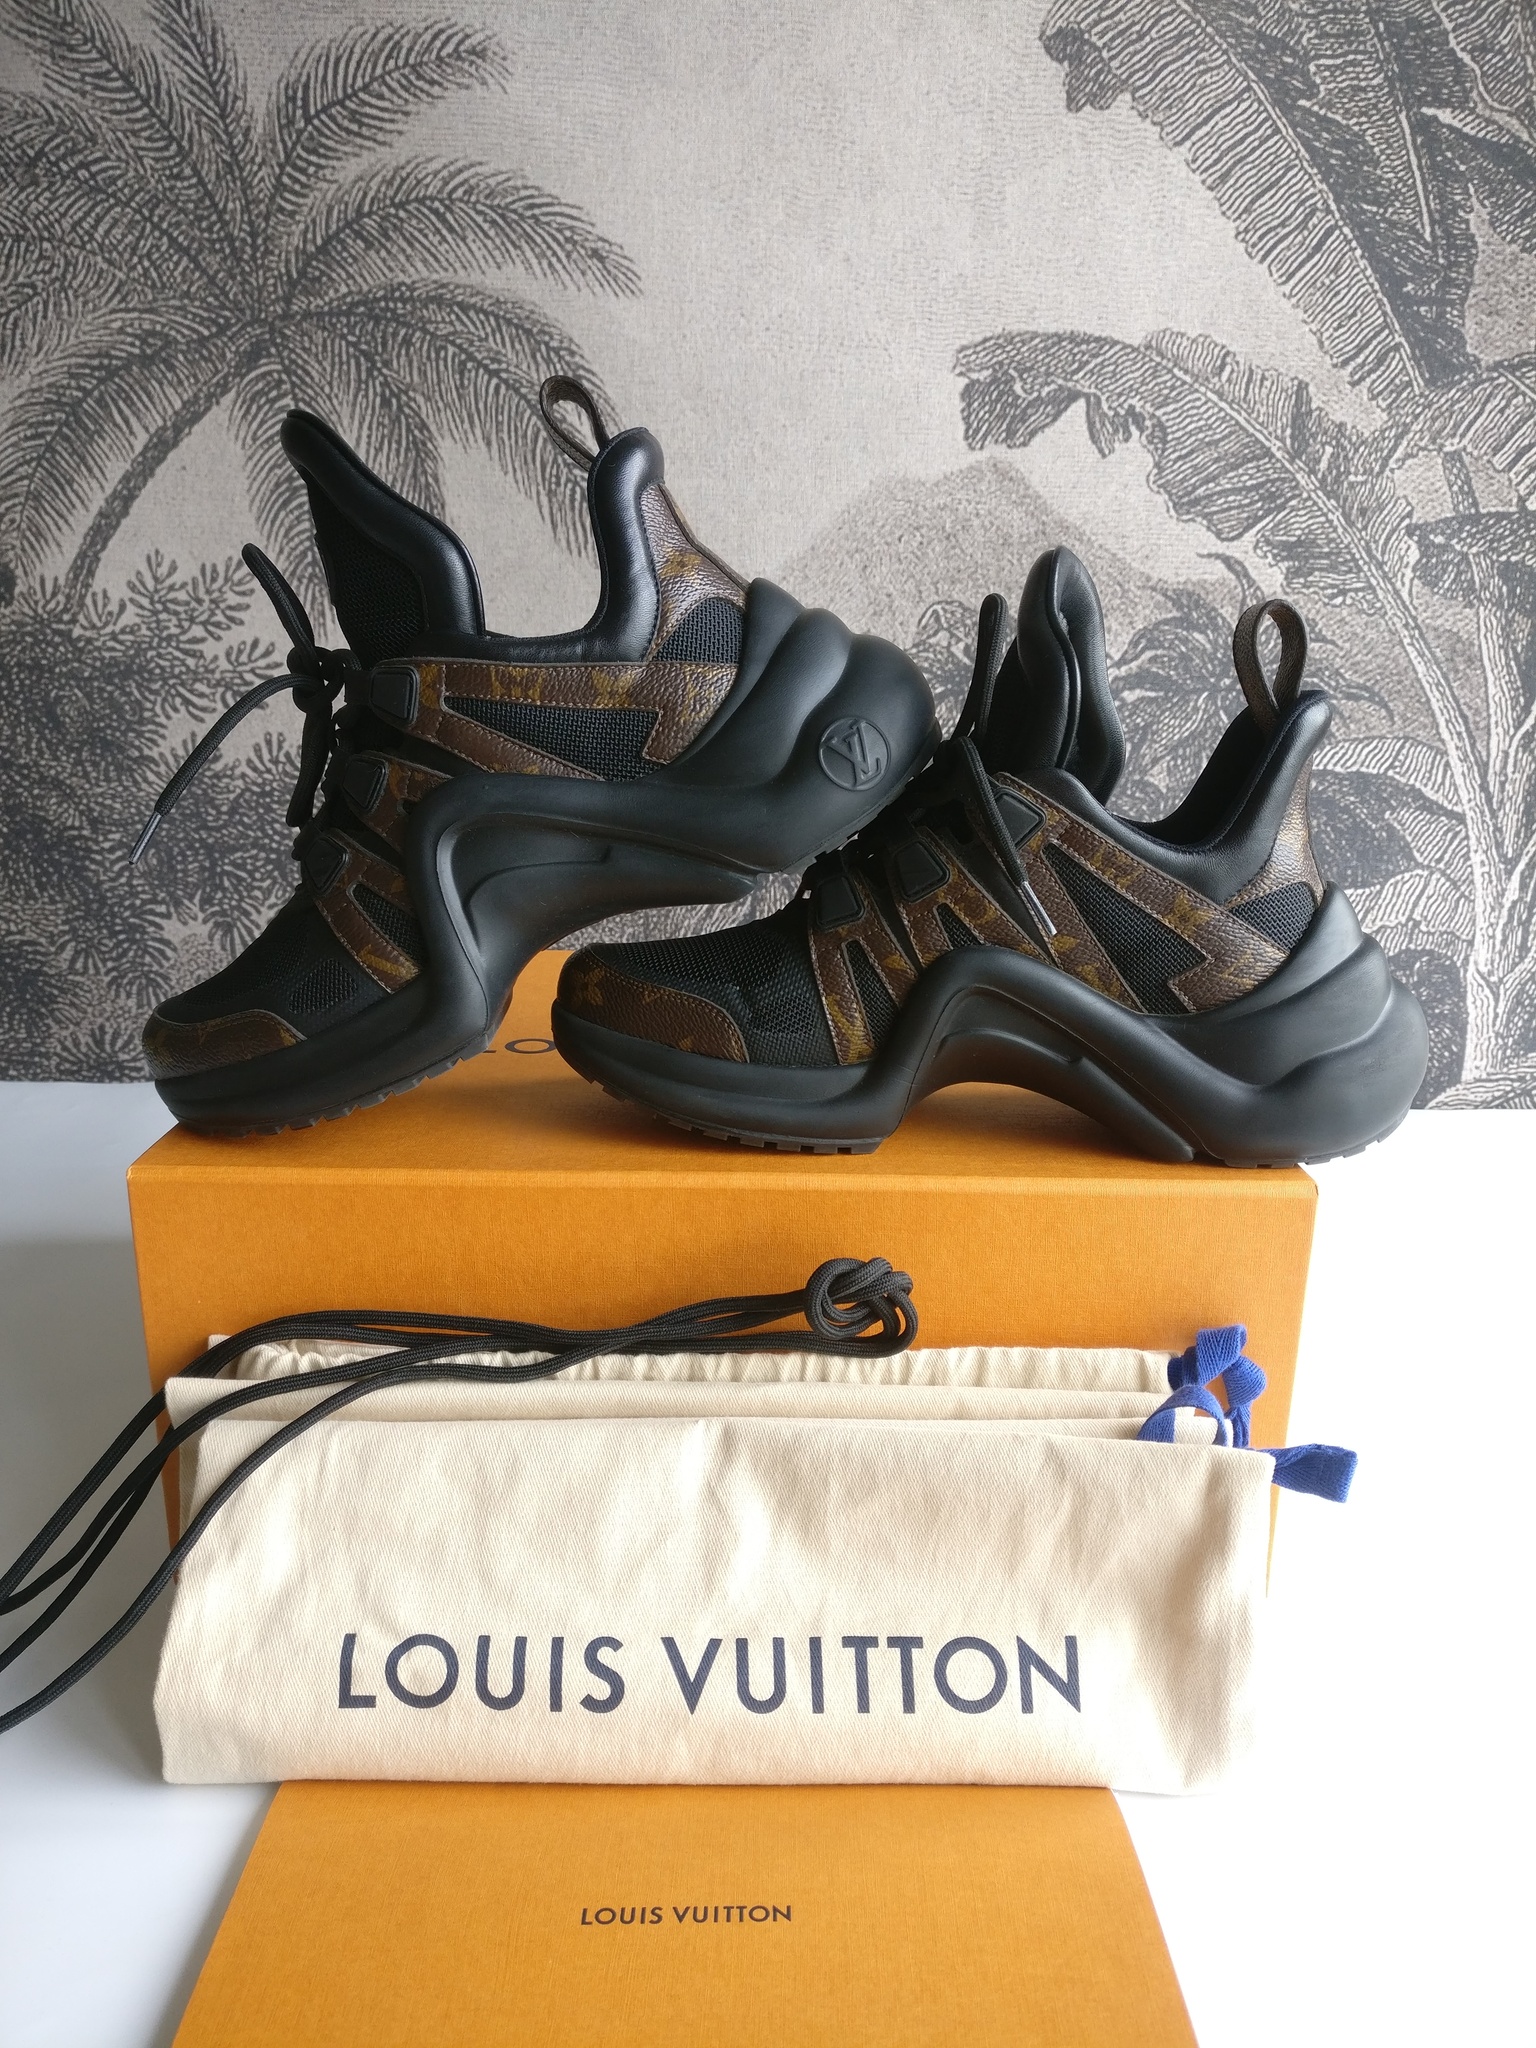 Louis Vuitton Archlight trainers